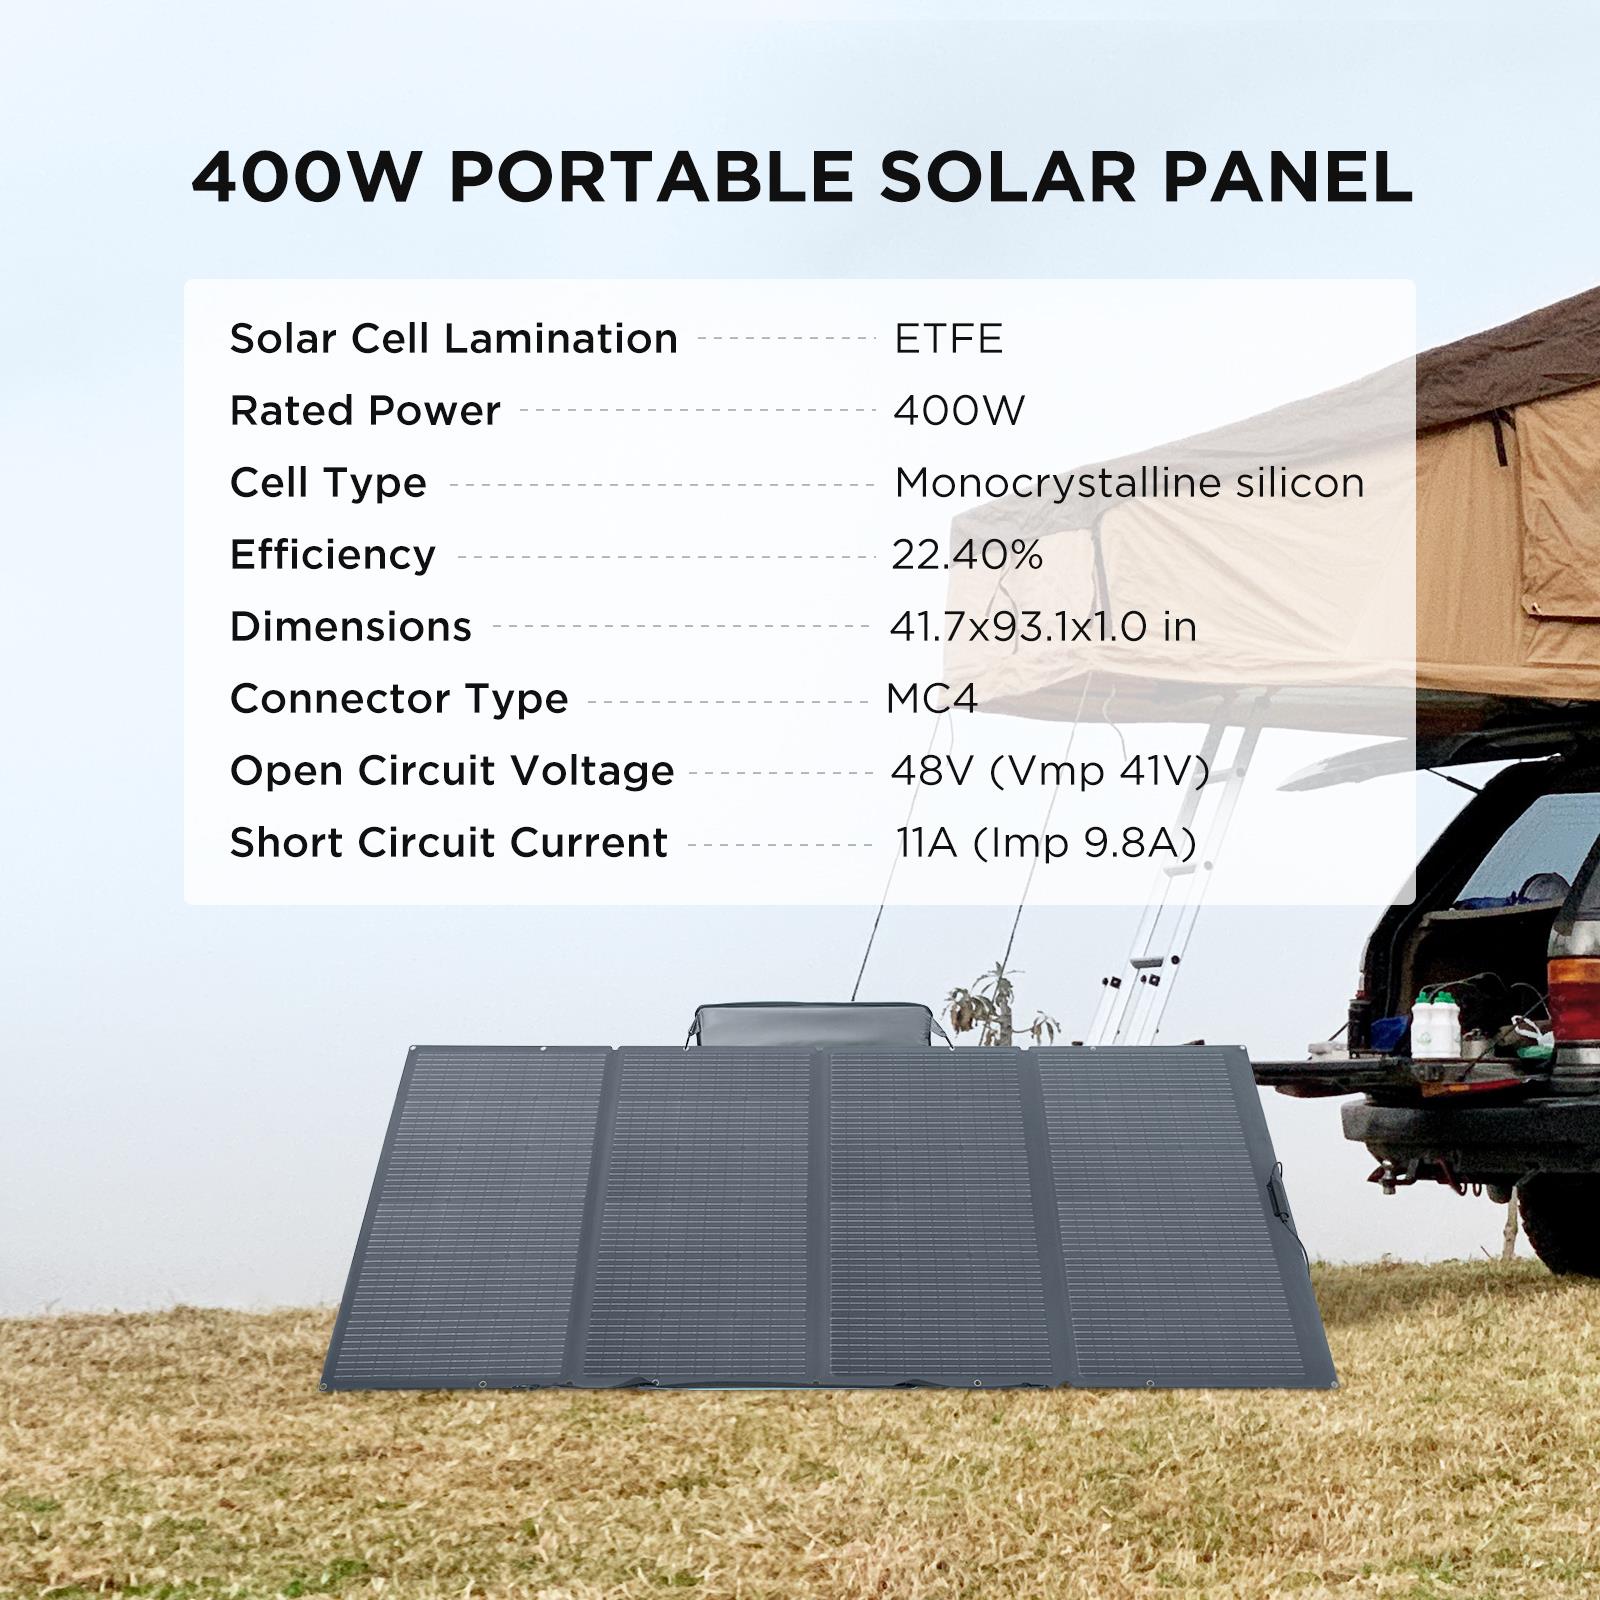 EcoFlow DELTA Max + 2 x 400W Rigid Solar Panel